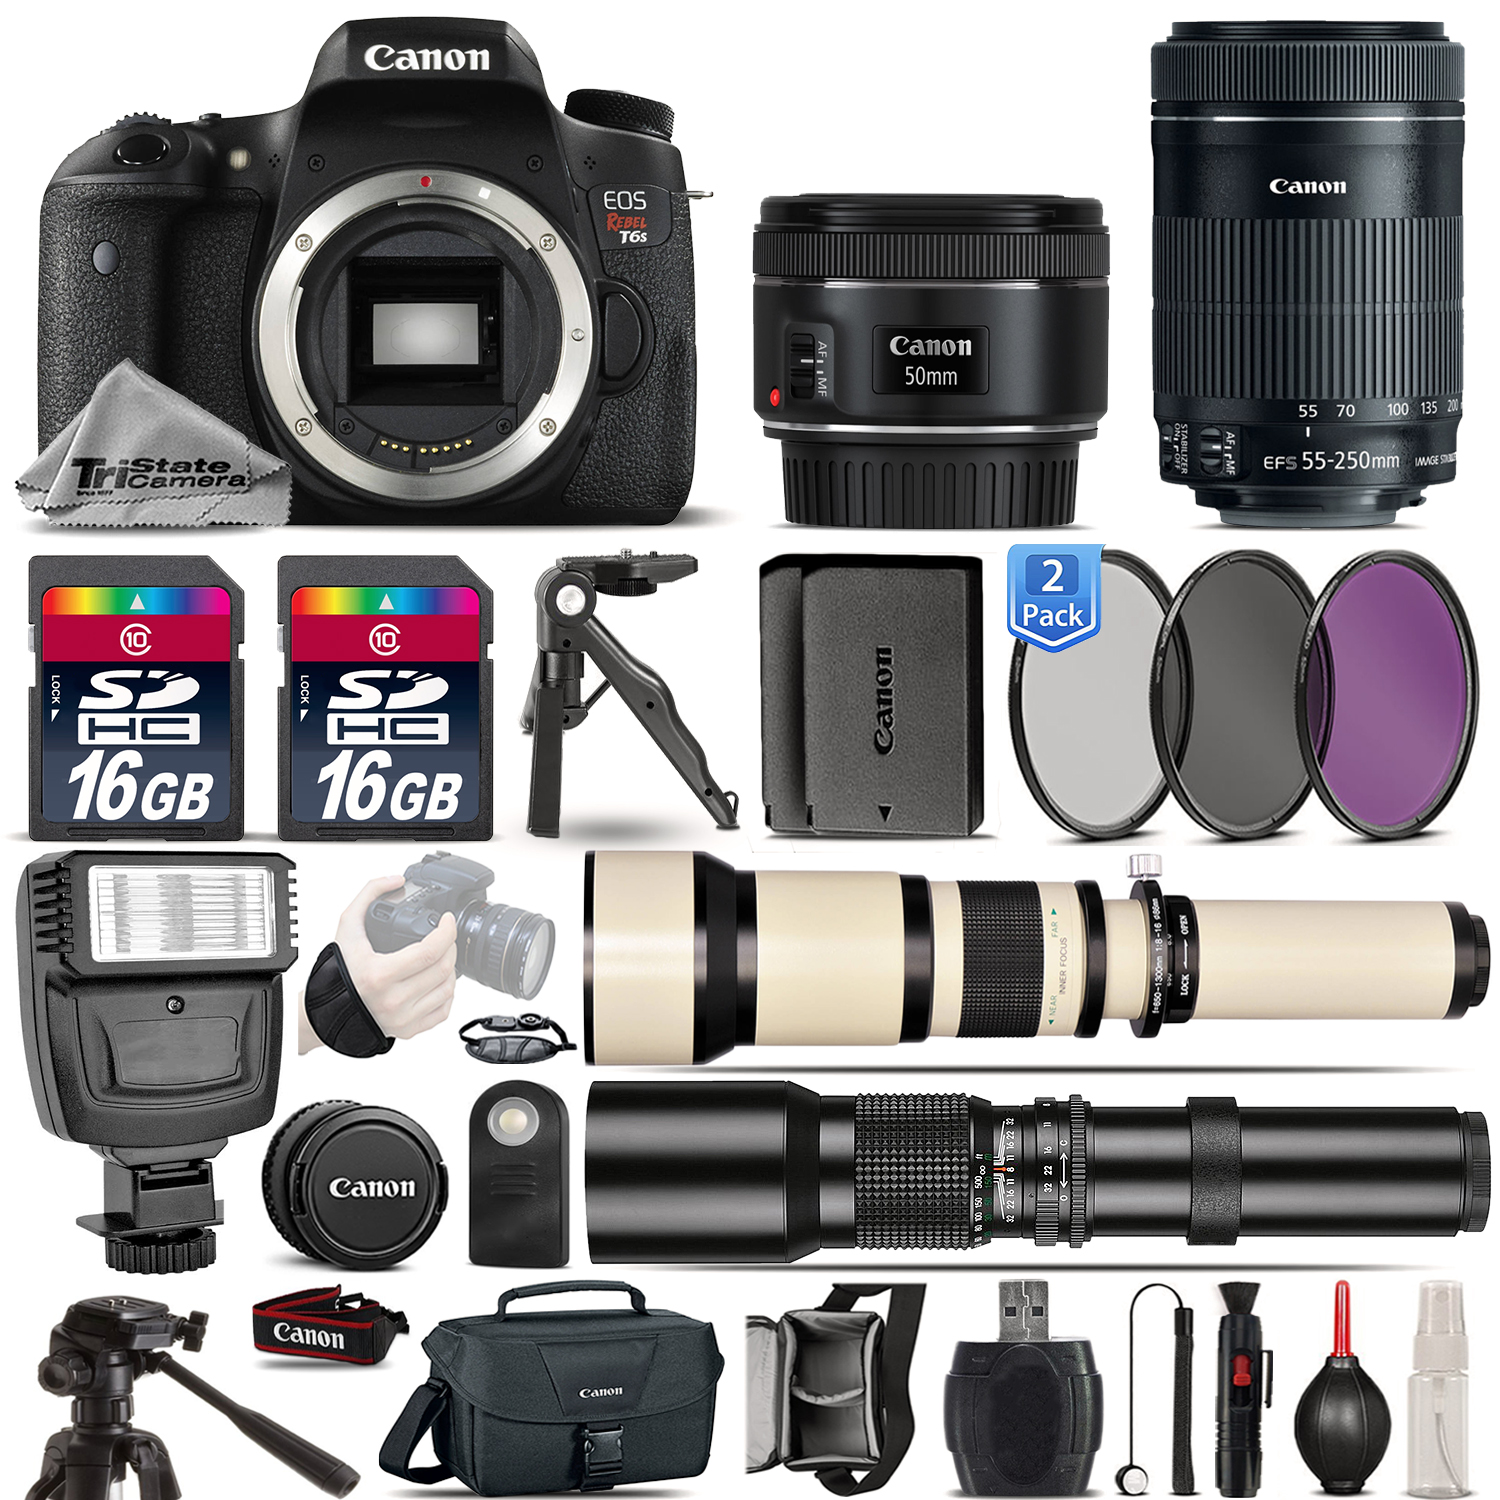 EOS Rebel T6s Camera 760D + 50mm 1.8 + 55-250mm STM + EXT BATT - 32GB Kit *FREE SHIPPING*